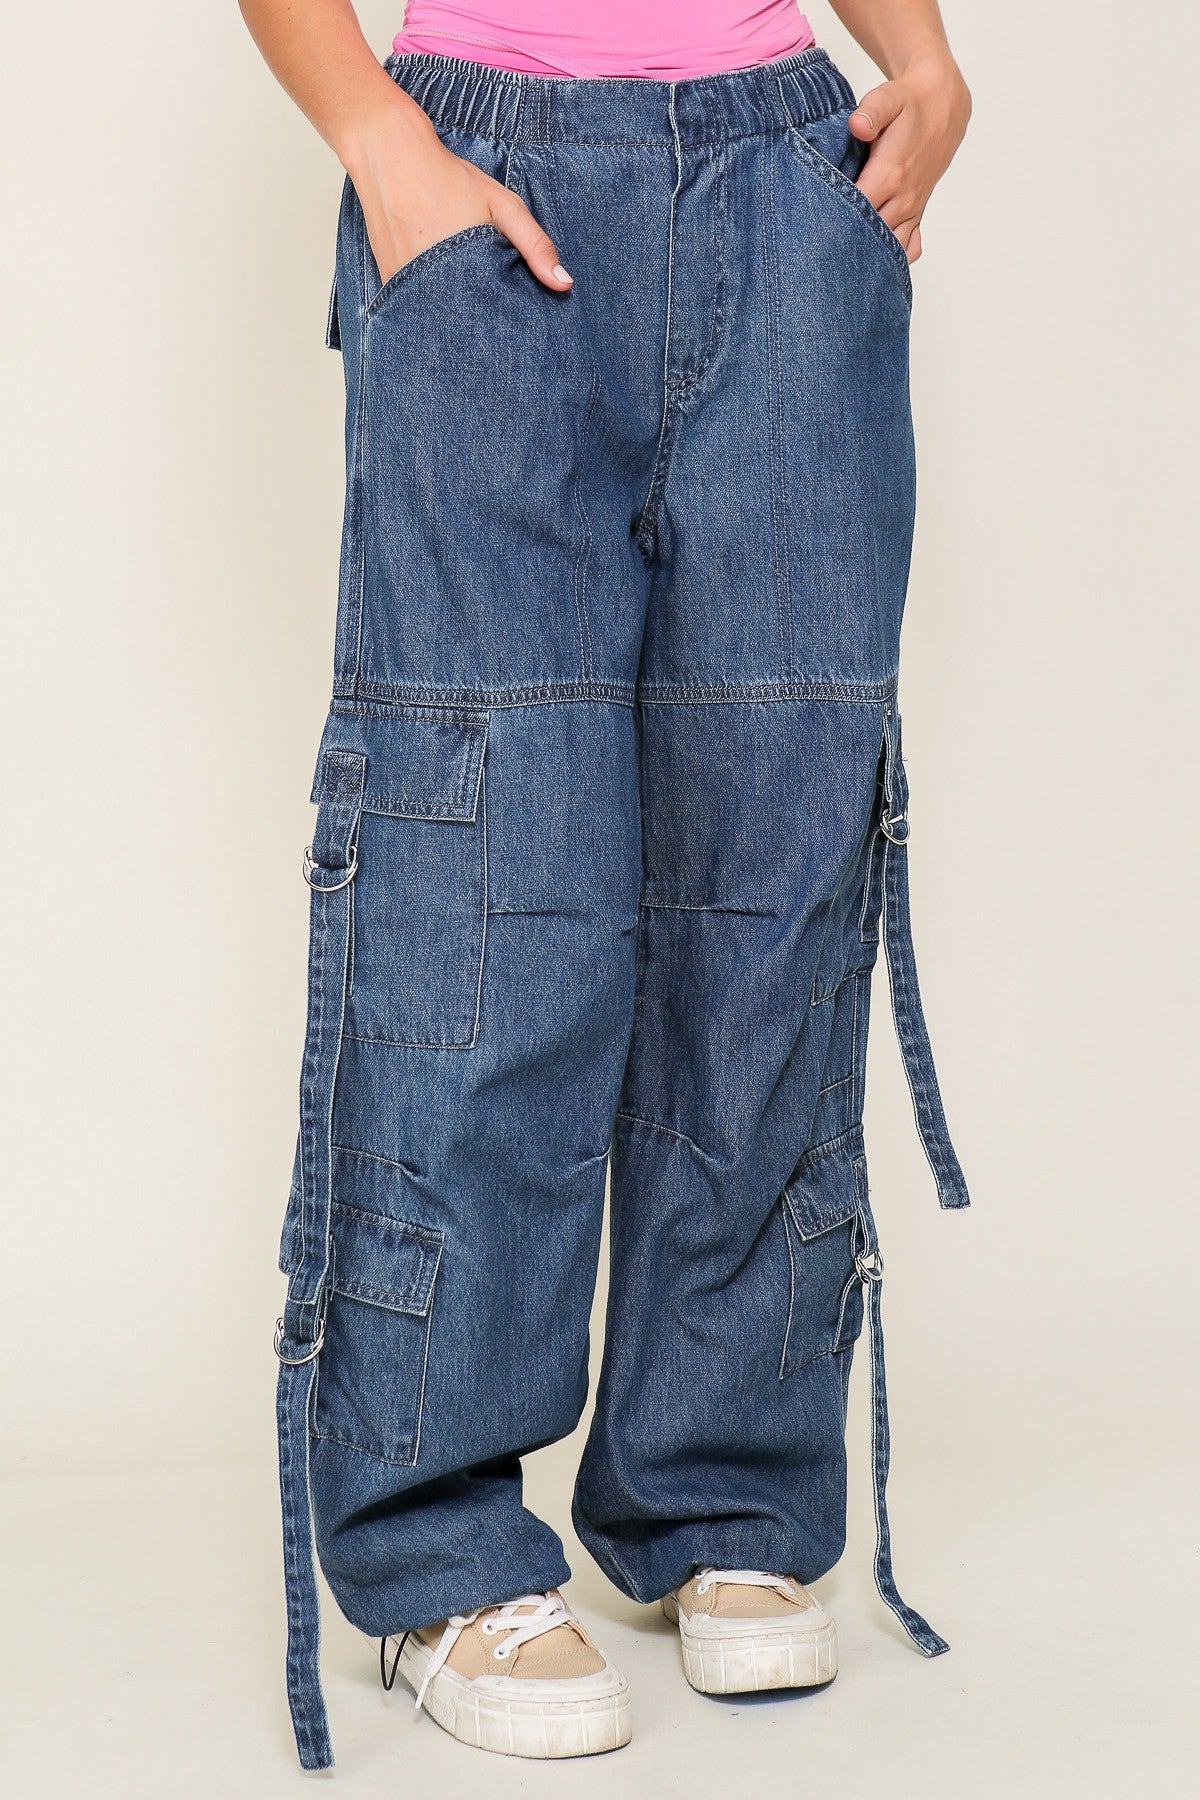 Jeans & Cargo Pants Buy One Get One 50% Off! at Petaluma Village